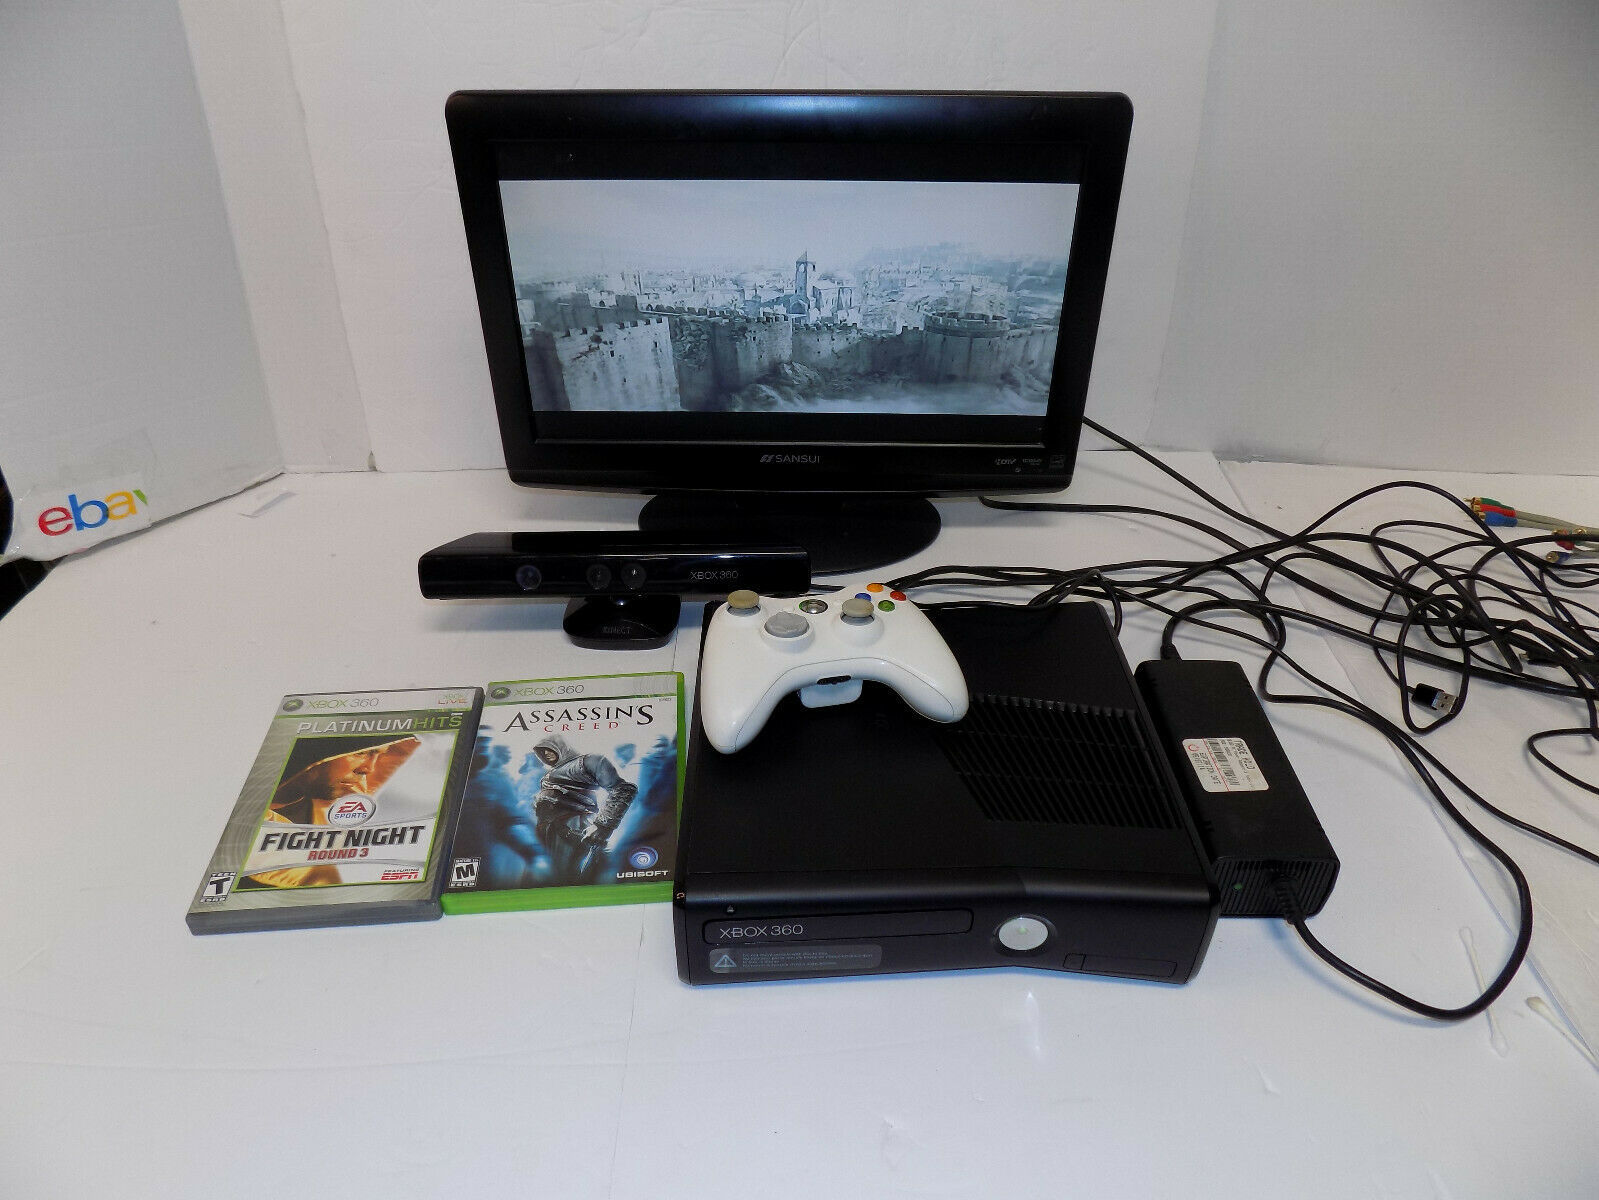 Restored Microsoft Xbox 360 Slim 250GB Video Game Console Black